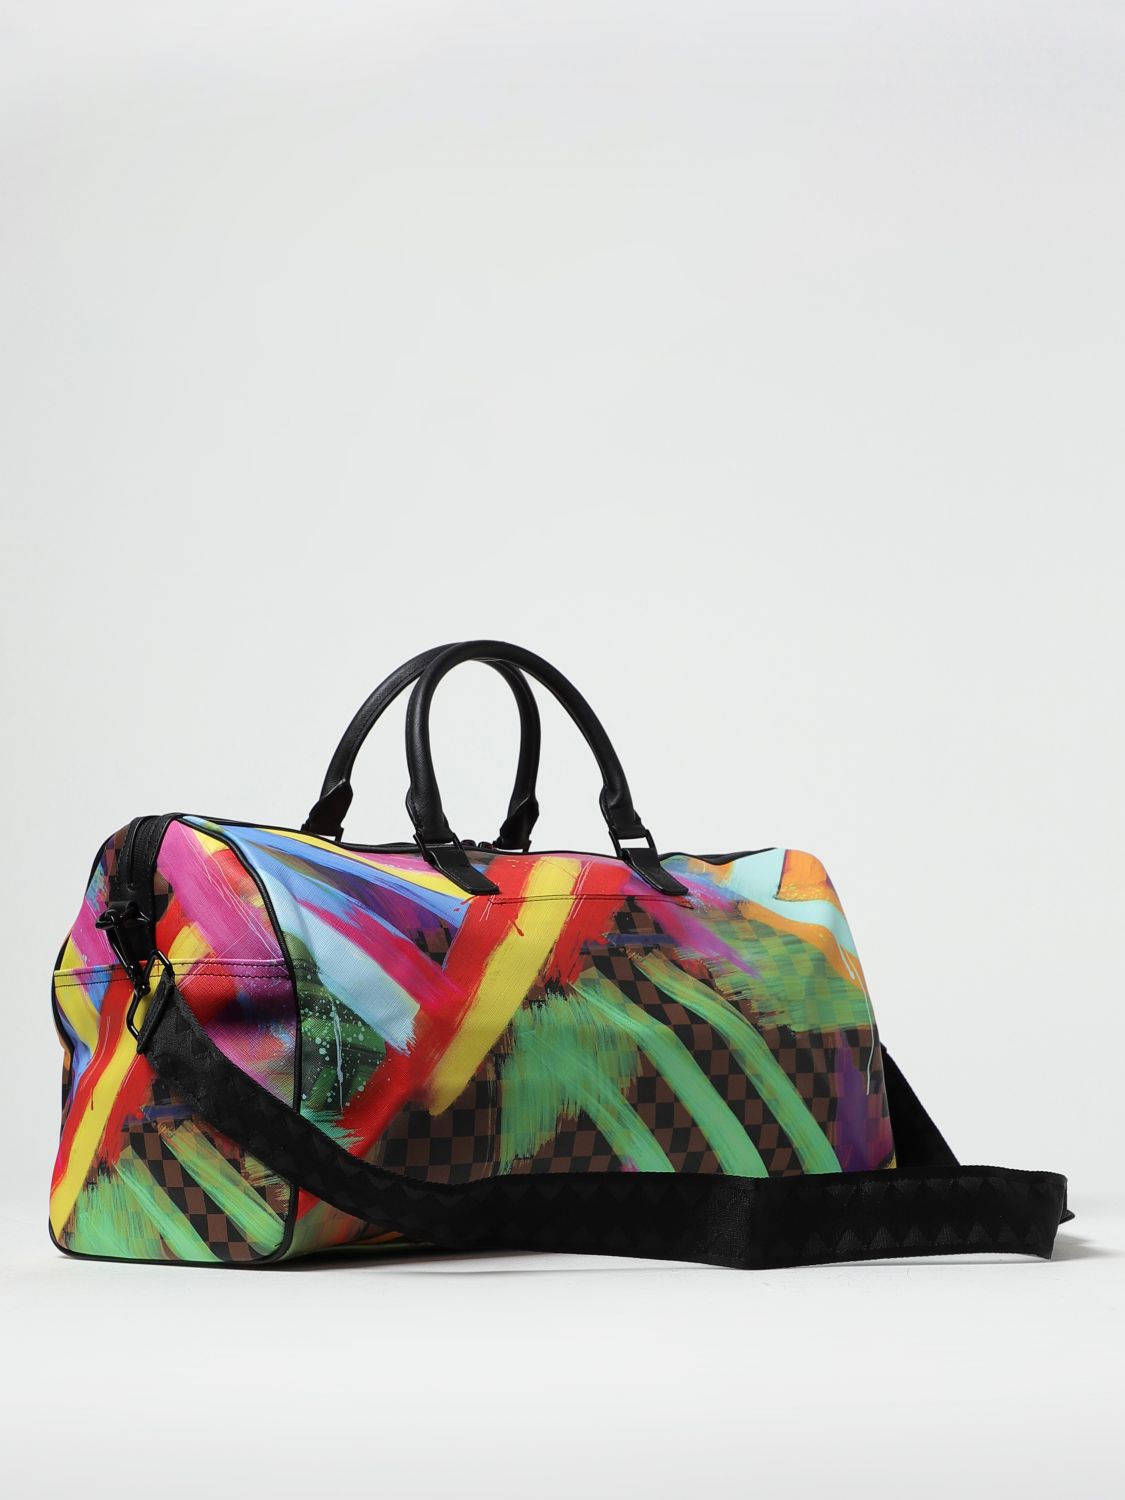 Sprayground Dope Bag Dealer Mini Duffle Bag - clothing & accessories - by  owner - apparel sale - craigslist